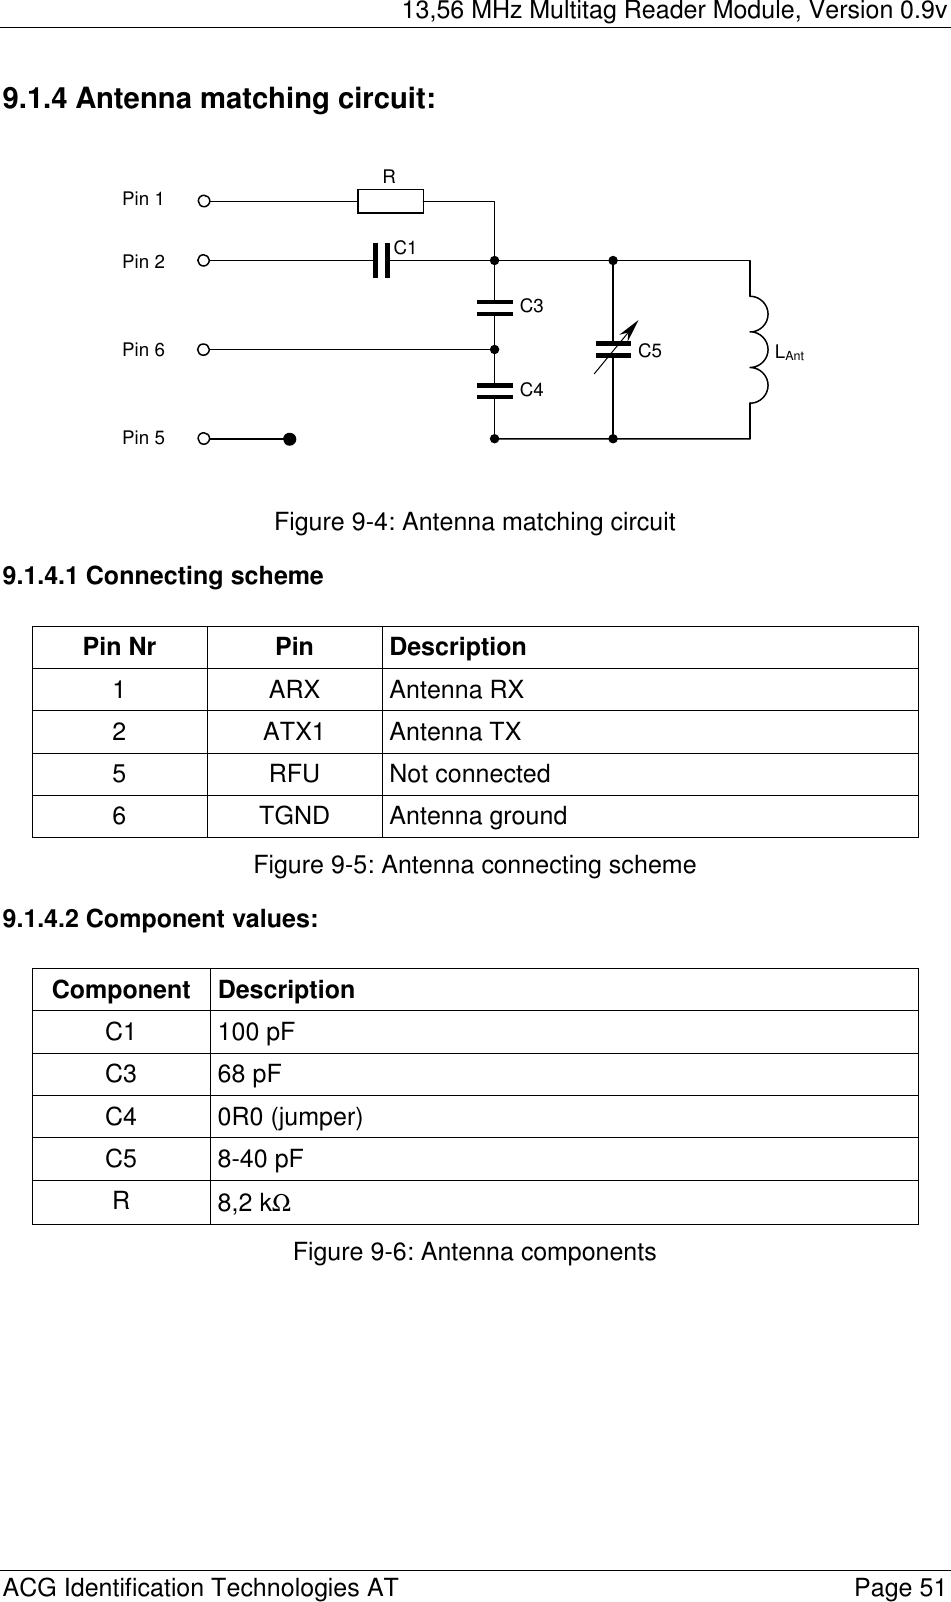 13,56 MHz Multitag Reader Module, Version 0.9v  ACG Identification Technologies AT    Page 51 9.1.4 Antenna matching circuit:              Figure 9-4: Antenna matching circuit 9.1.4.1 Connecting scheme  Pin Nr  Pin  Description 1  ARX  Antenna RX  2 ATX1 Antenna TX  5 RFU Not connected 6 TGND Antenna ground Figure 9-5: Antenna connecting scheme 9.1.4.2 Component values:  Component Description C1 100 pF C3 68 pF C4 0R0 (jumper) C5 8-40 pF R  8,2 kΩ Figure 9-6: Antenna components C3C4RC1C5 LAnt Pin 1Pin 2Pin 6Pin 5